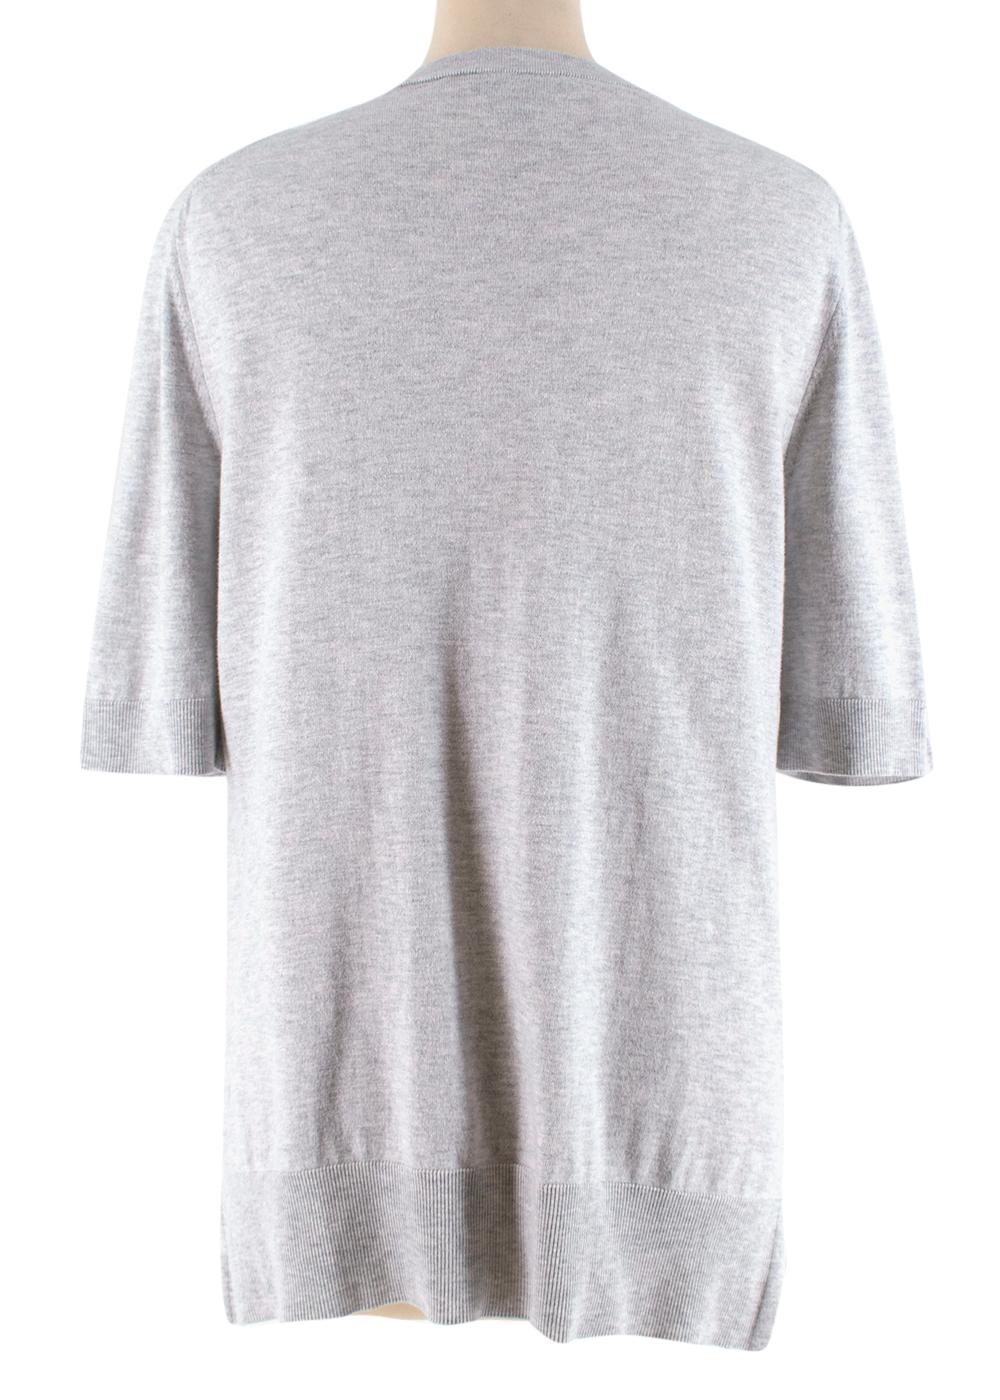 grey short sleeve sweater